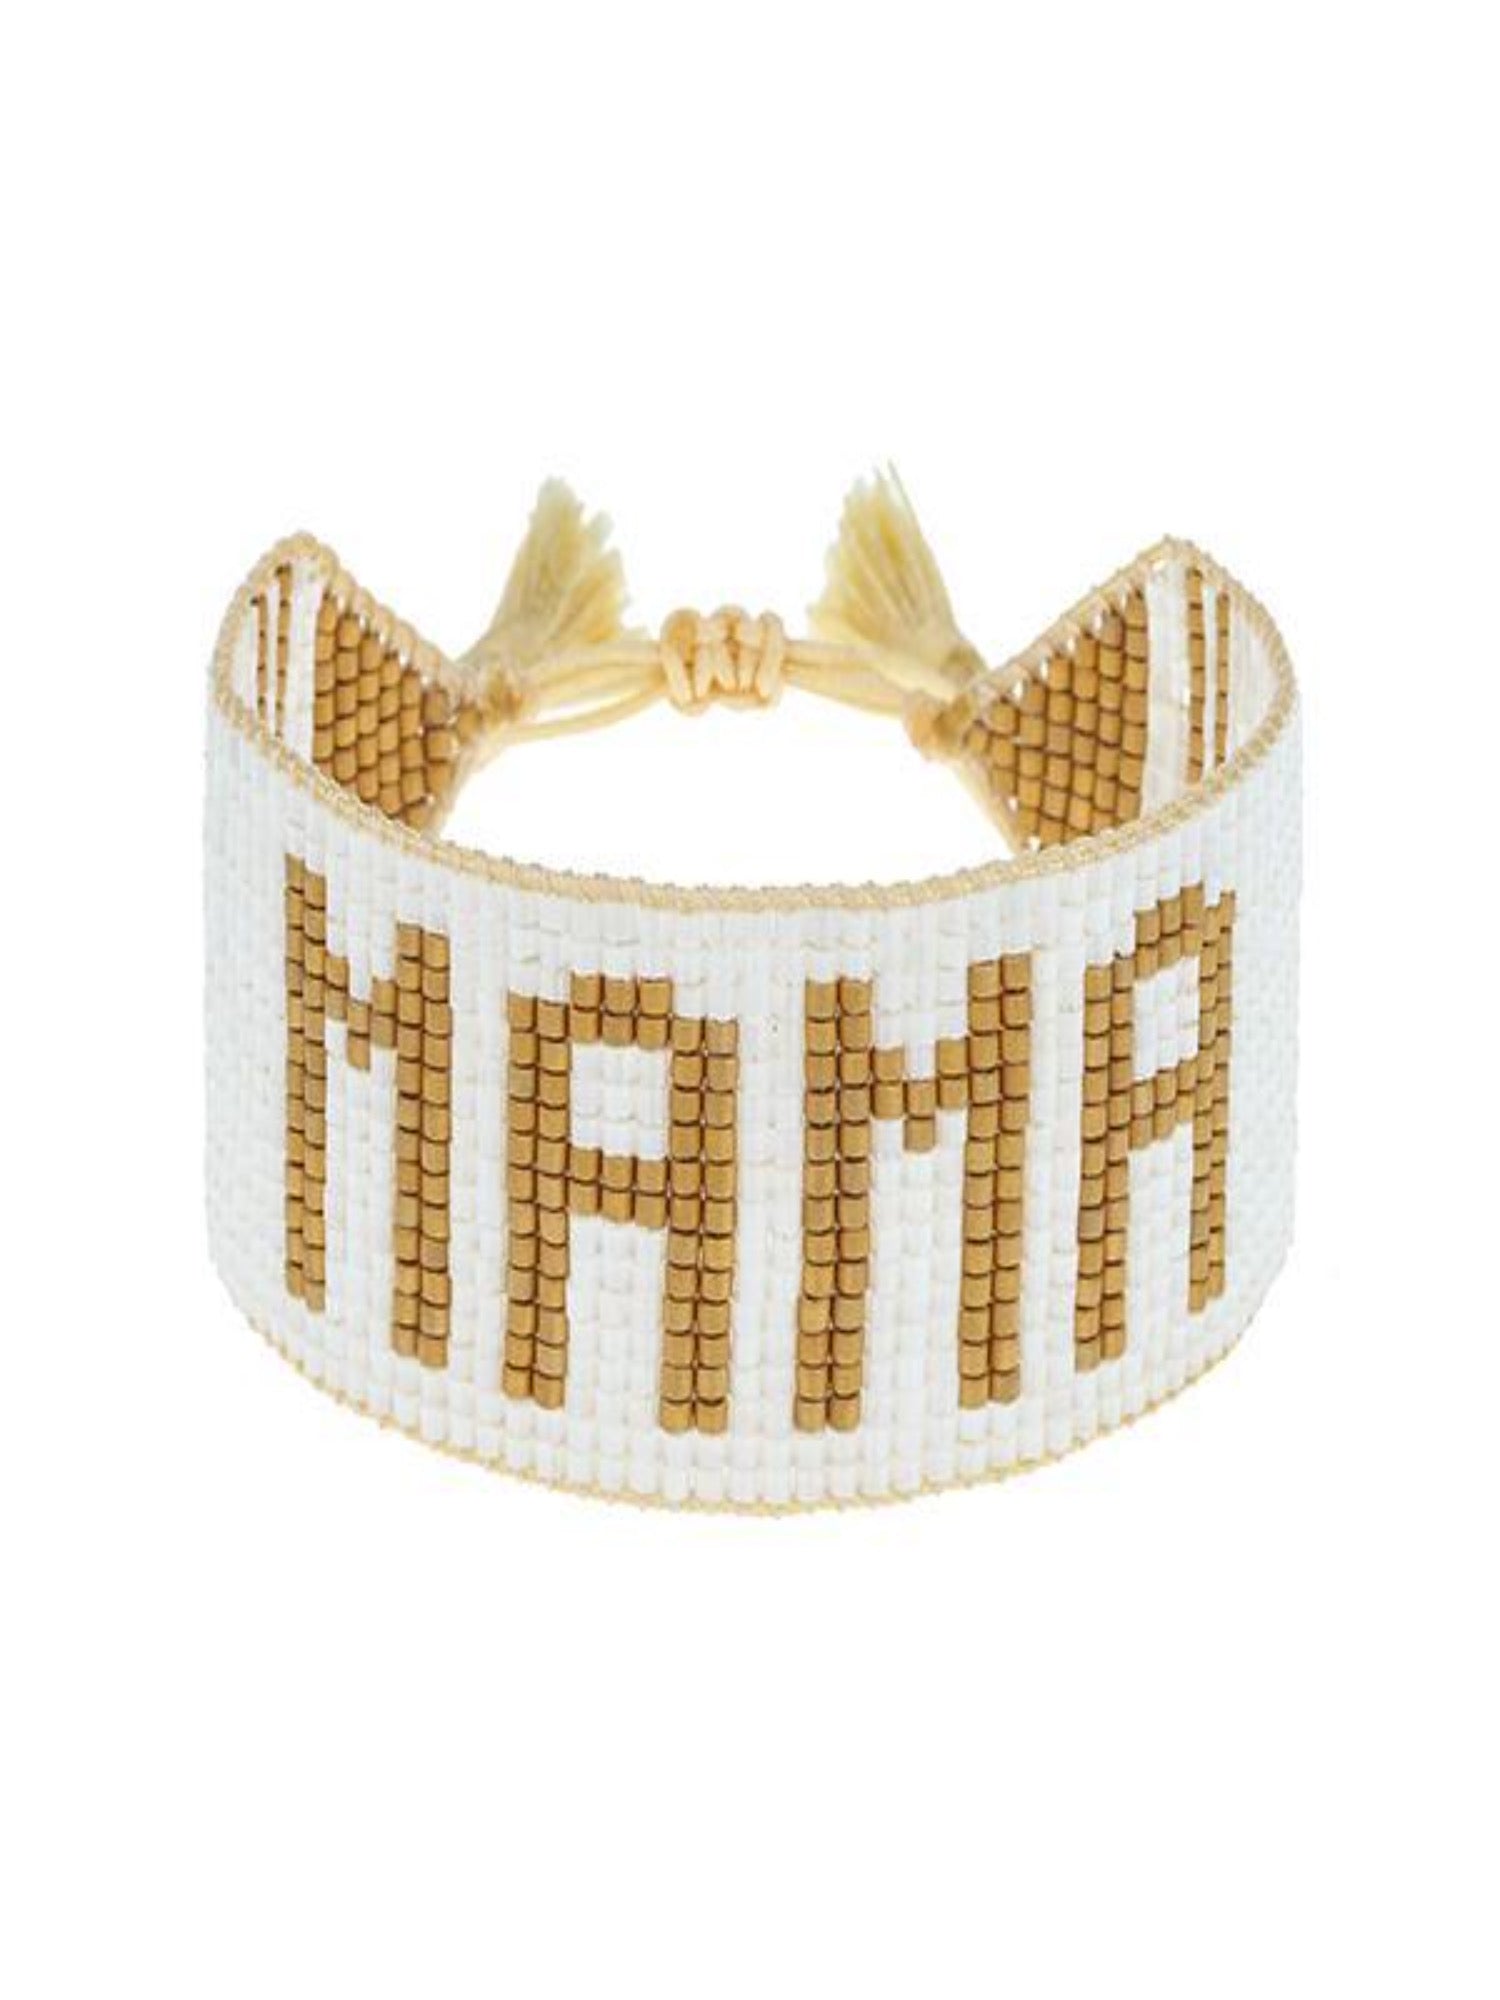 Mama Bracelet - Gold on Ivory